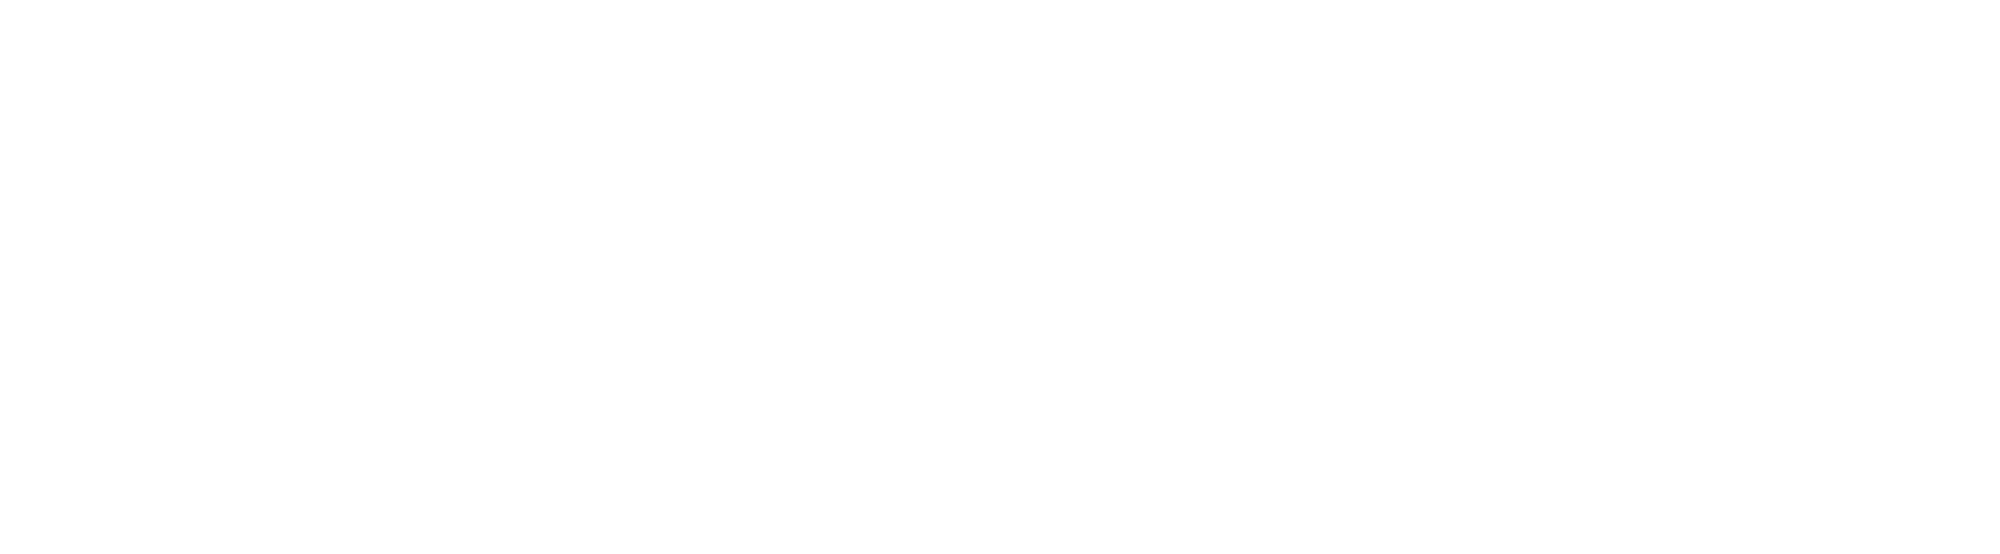 Kwick Dumpster